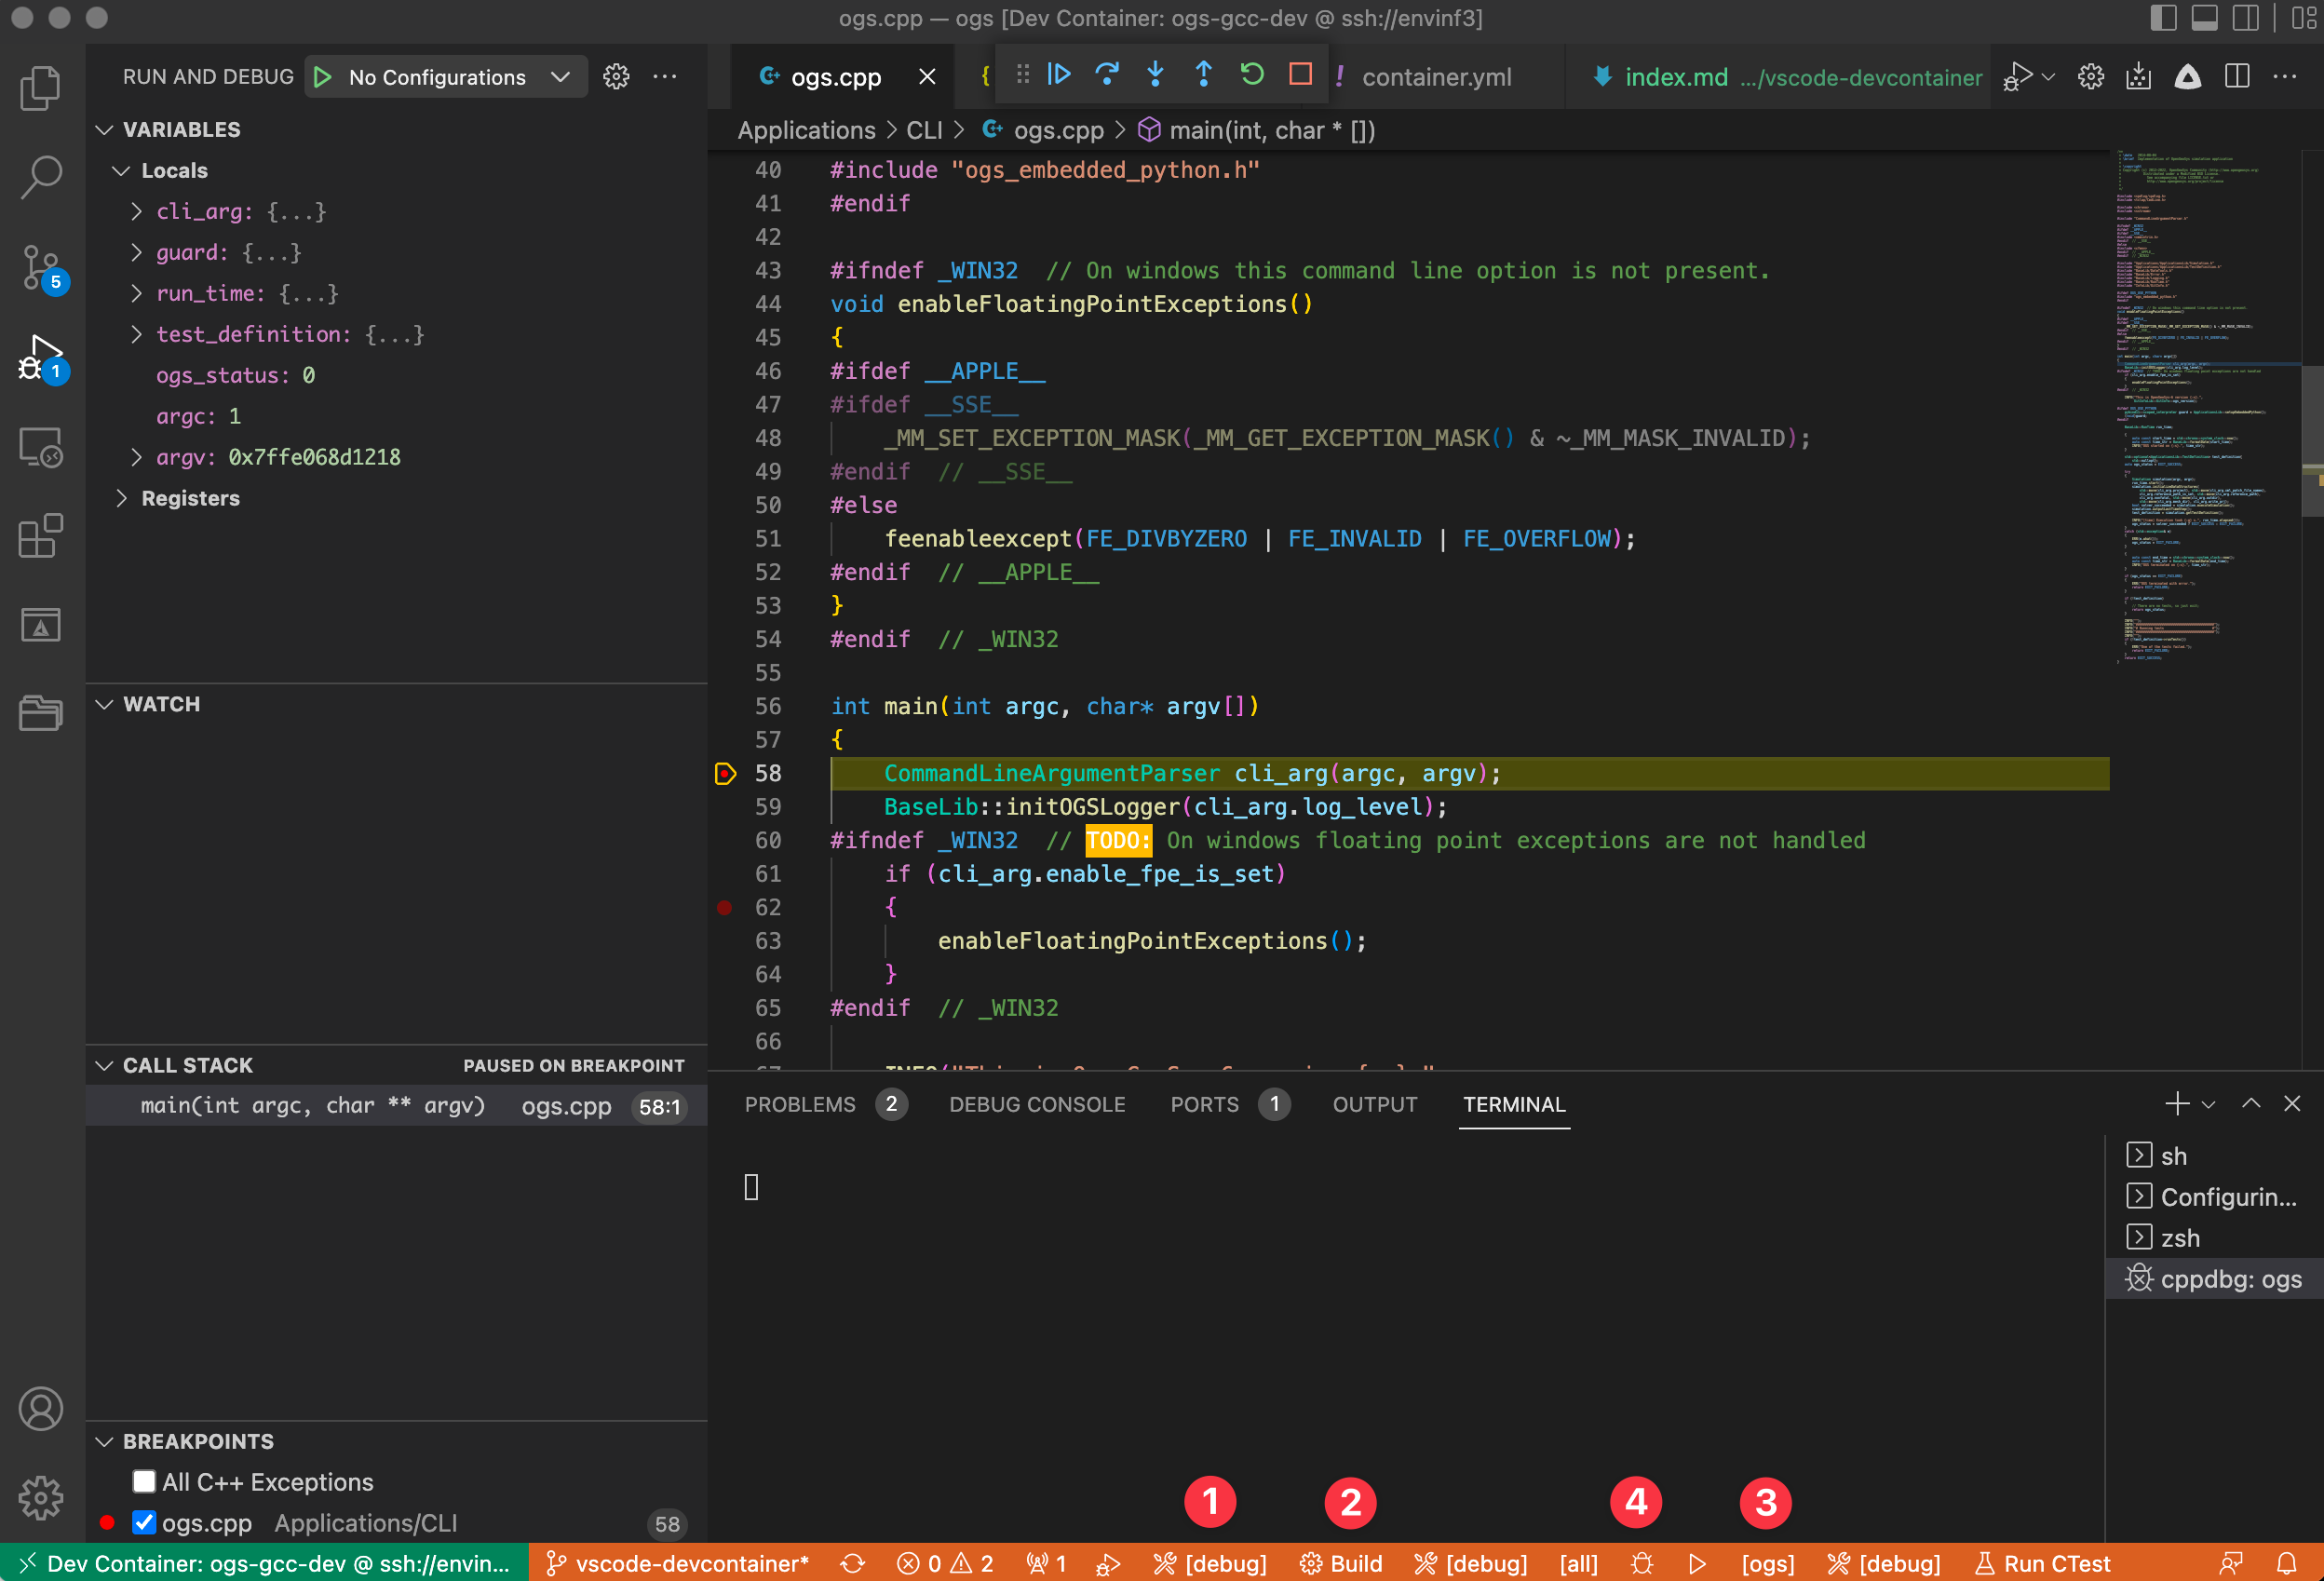 VS Code debugging session